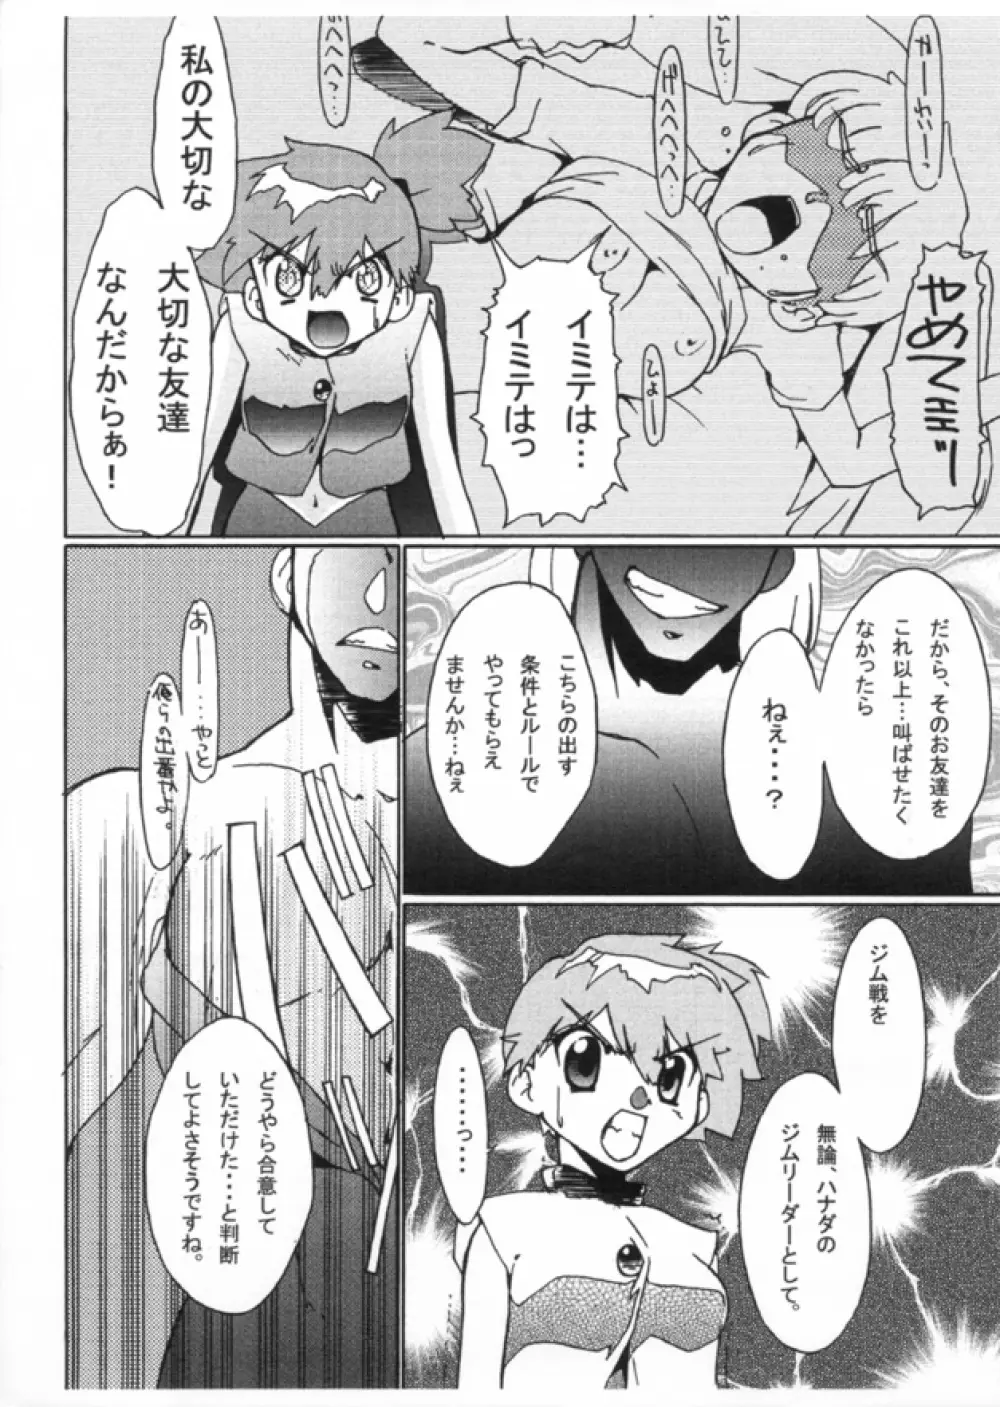 KASUMIX XPLOSION Kasumi Comic part5 - page41